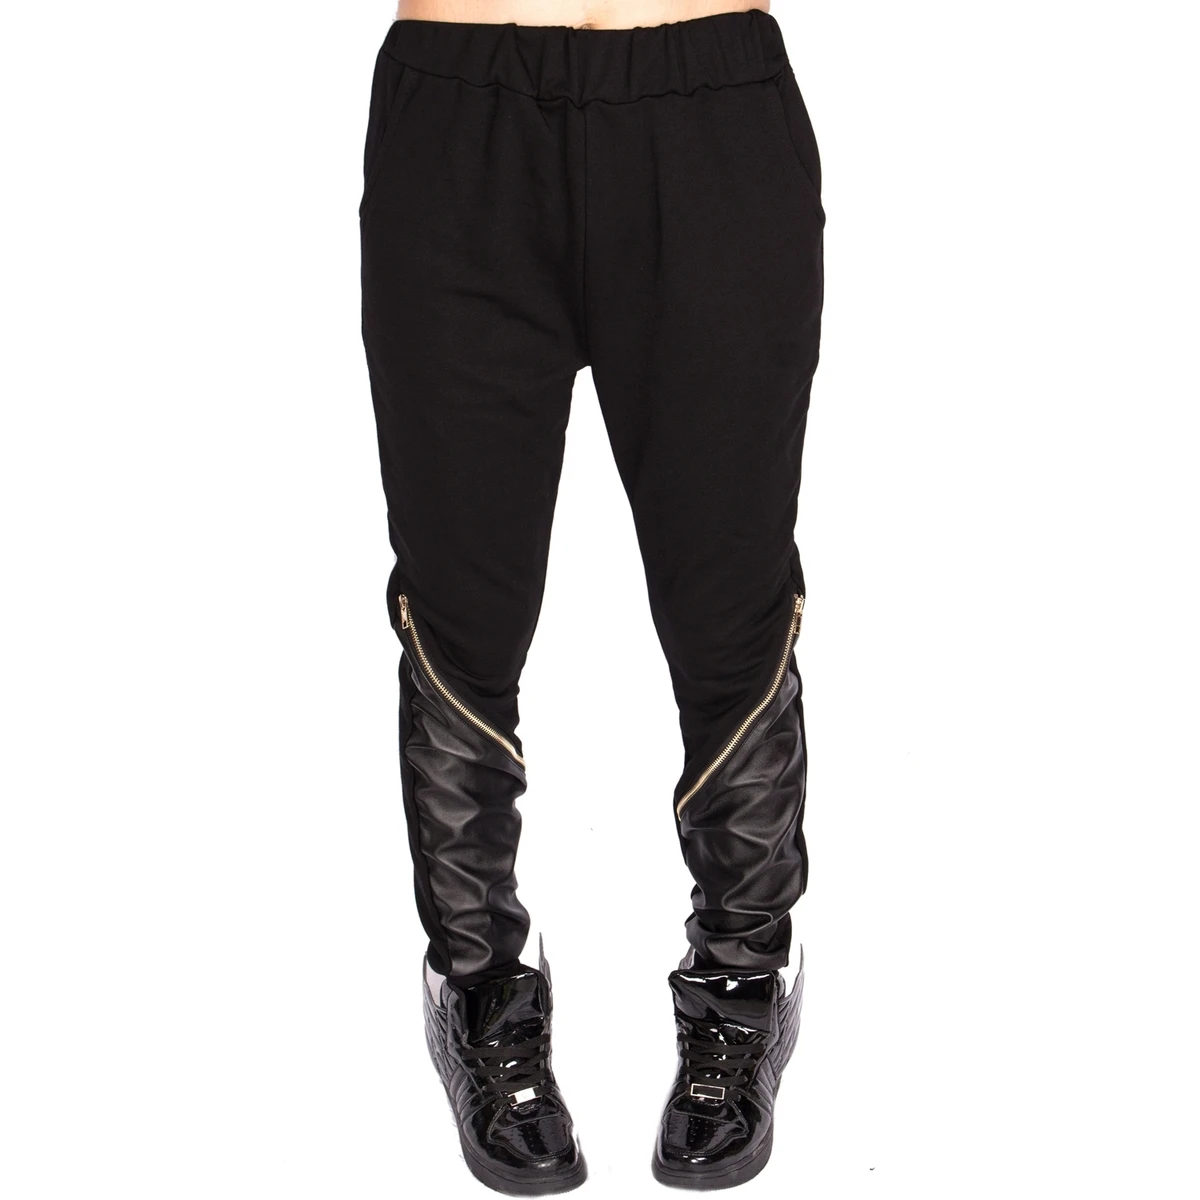 Nové umělé kožené nášivky na zip vložené hip hopové kalhoty Street Street, divoký styl, bavlna, černé hubené kalhoty